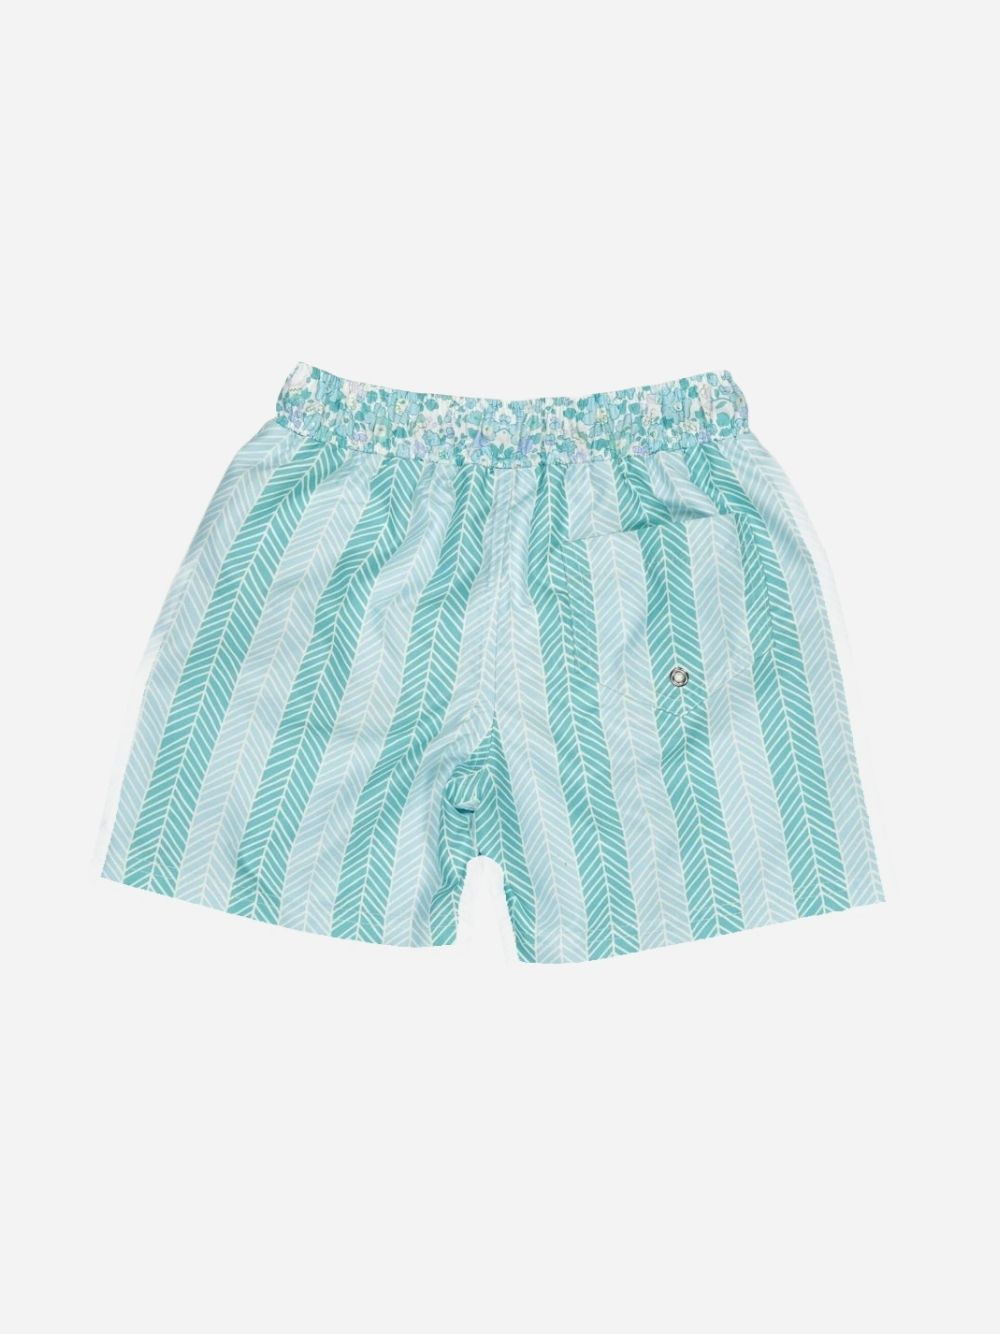 Aqua classic swim shorts